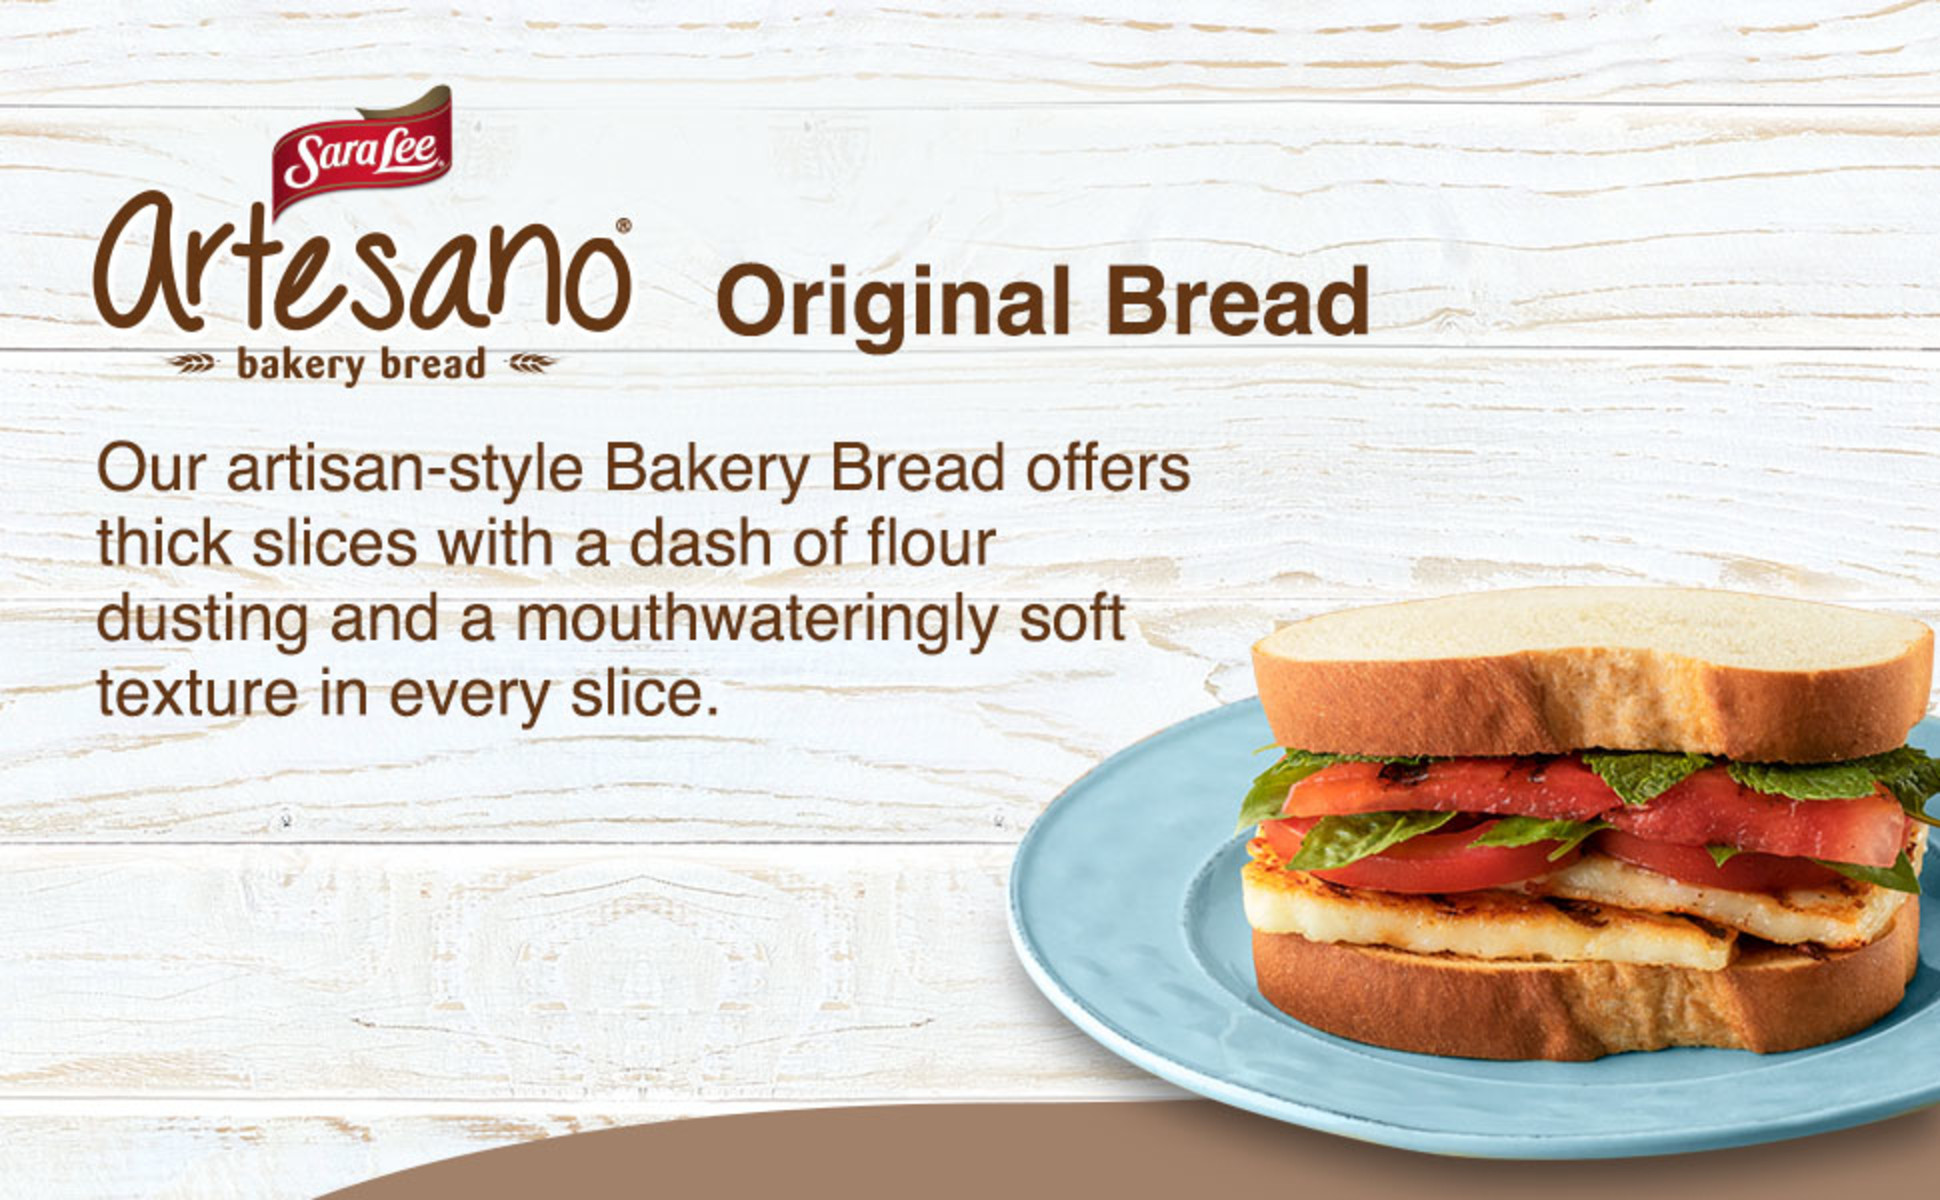 Sara Lee Artesano The Original Bakery Bread - Shop Sliced Bread at H-E-B